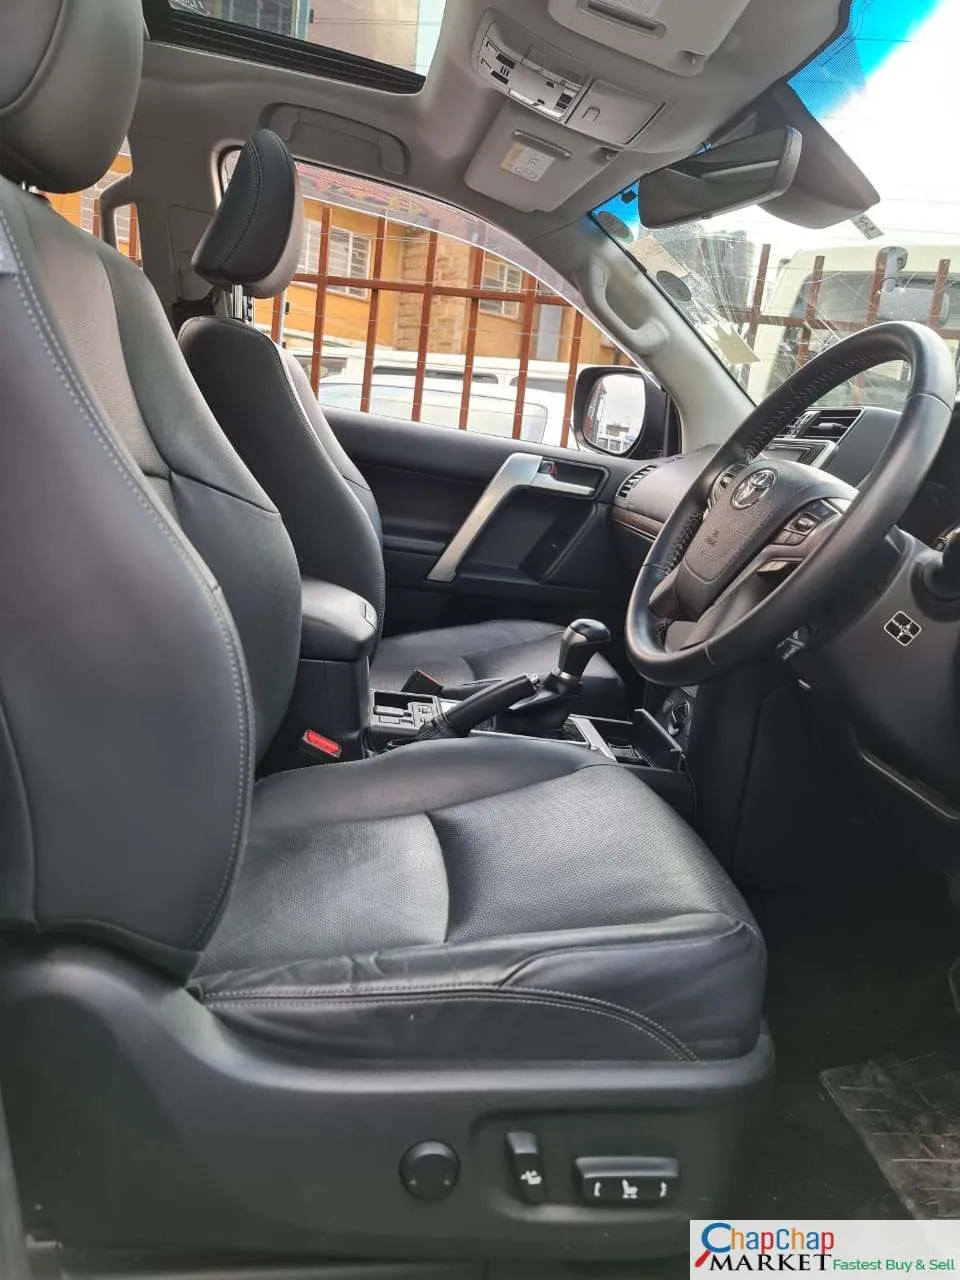 Toyota Land Cruiser PRADO 2018 Sunroof Quick SALE TRADE IN OK EXCLUSIVE!